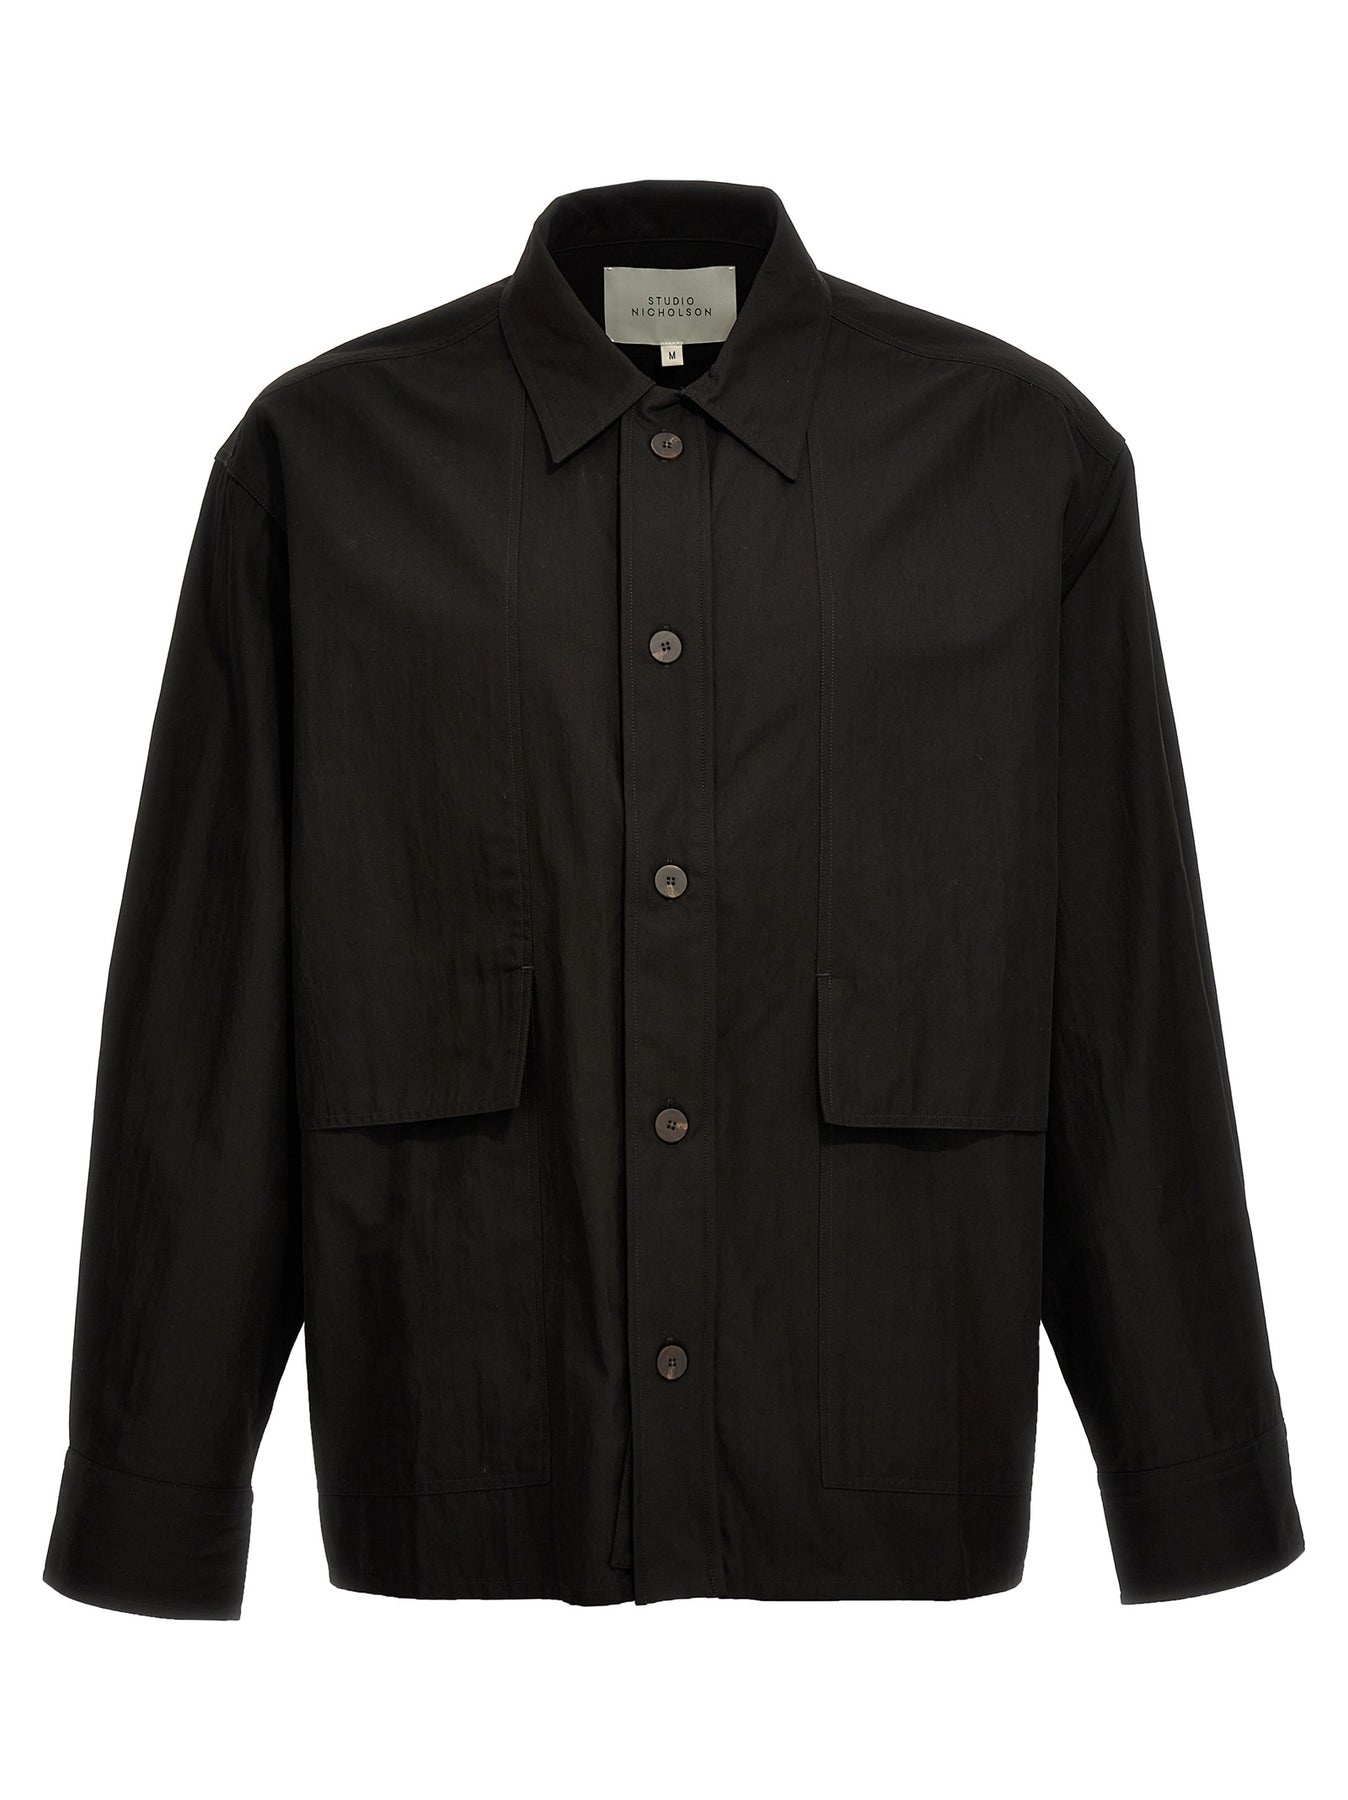 Military Shirt, Blouse Black - 1